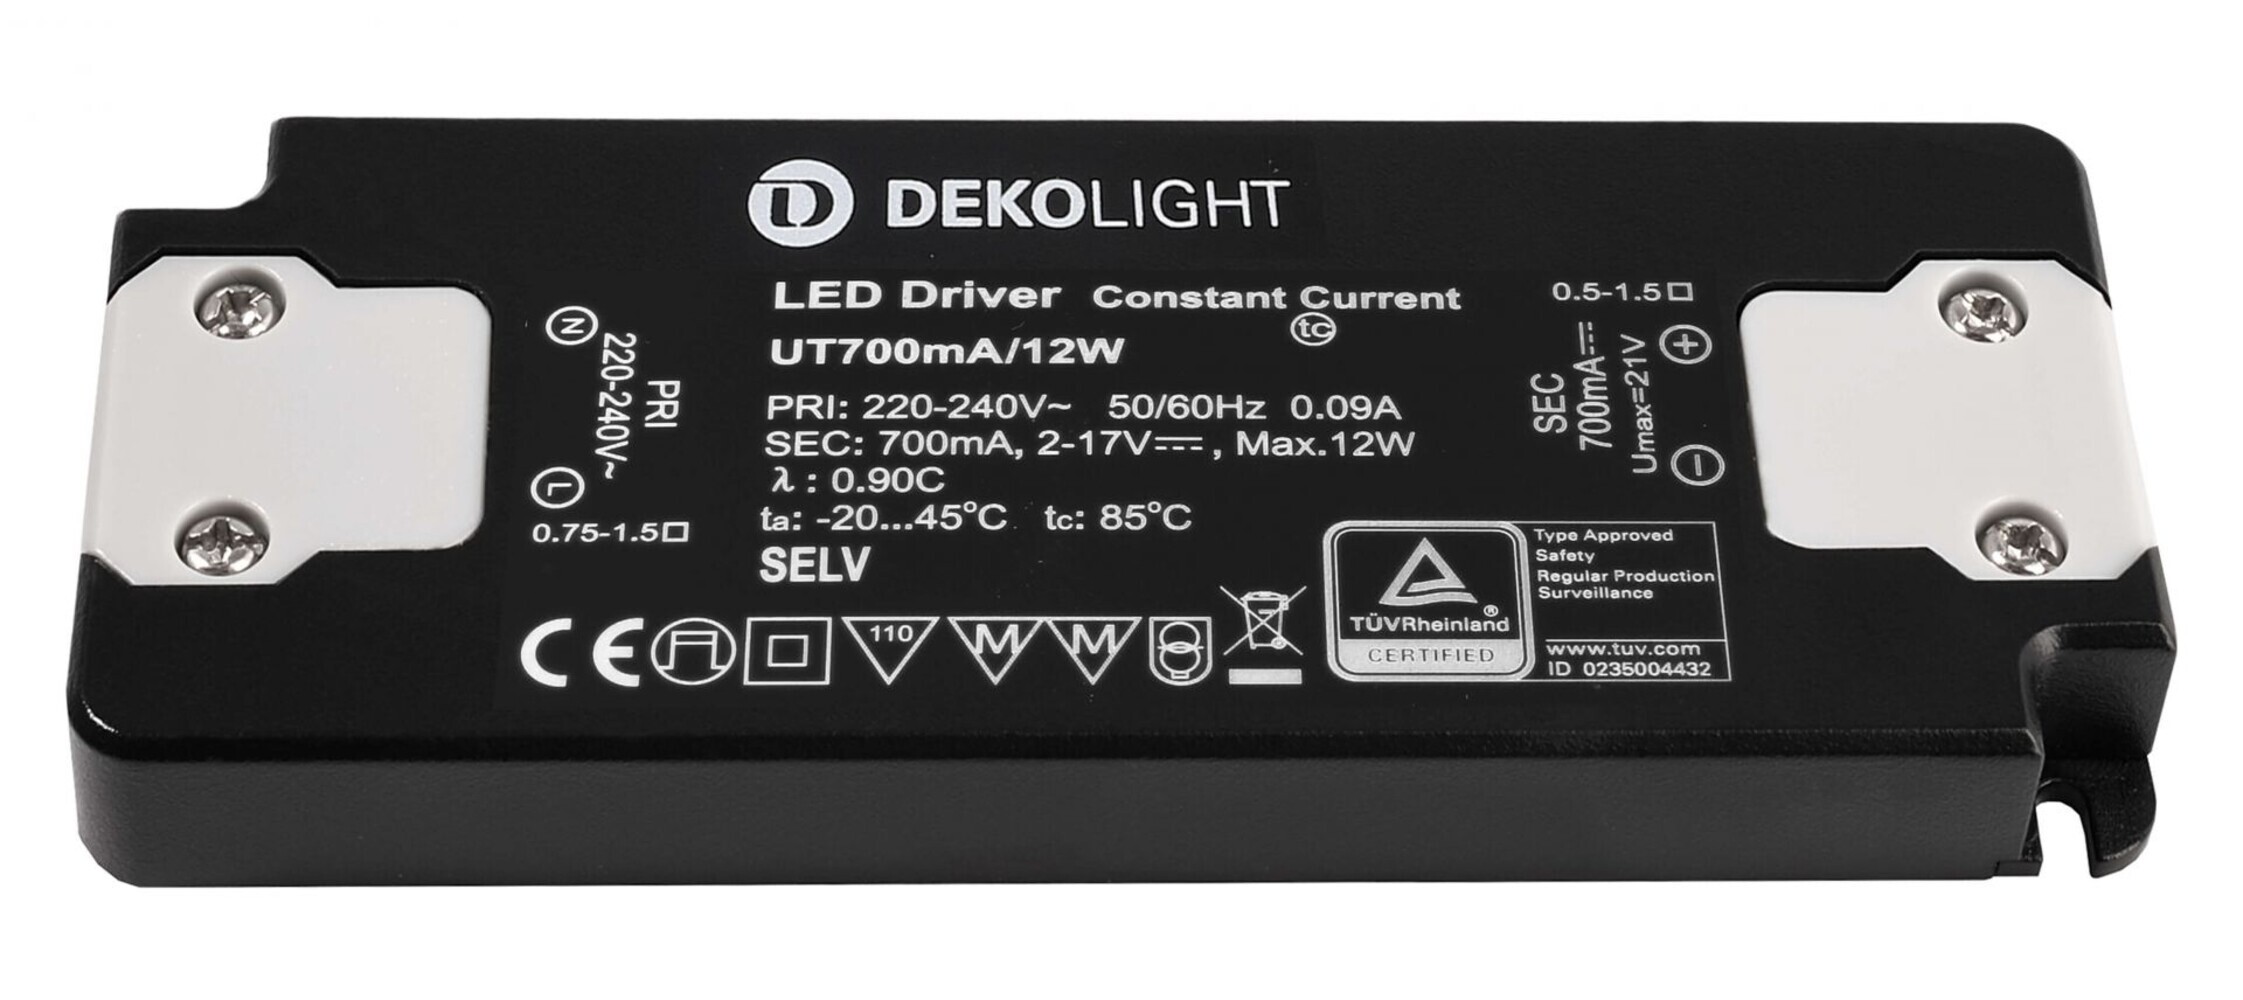 Qualitatives LED Netzteil von Deko-Light in moderner Optik